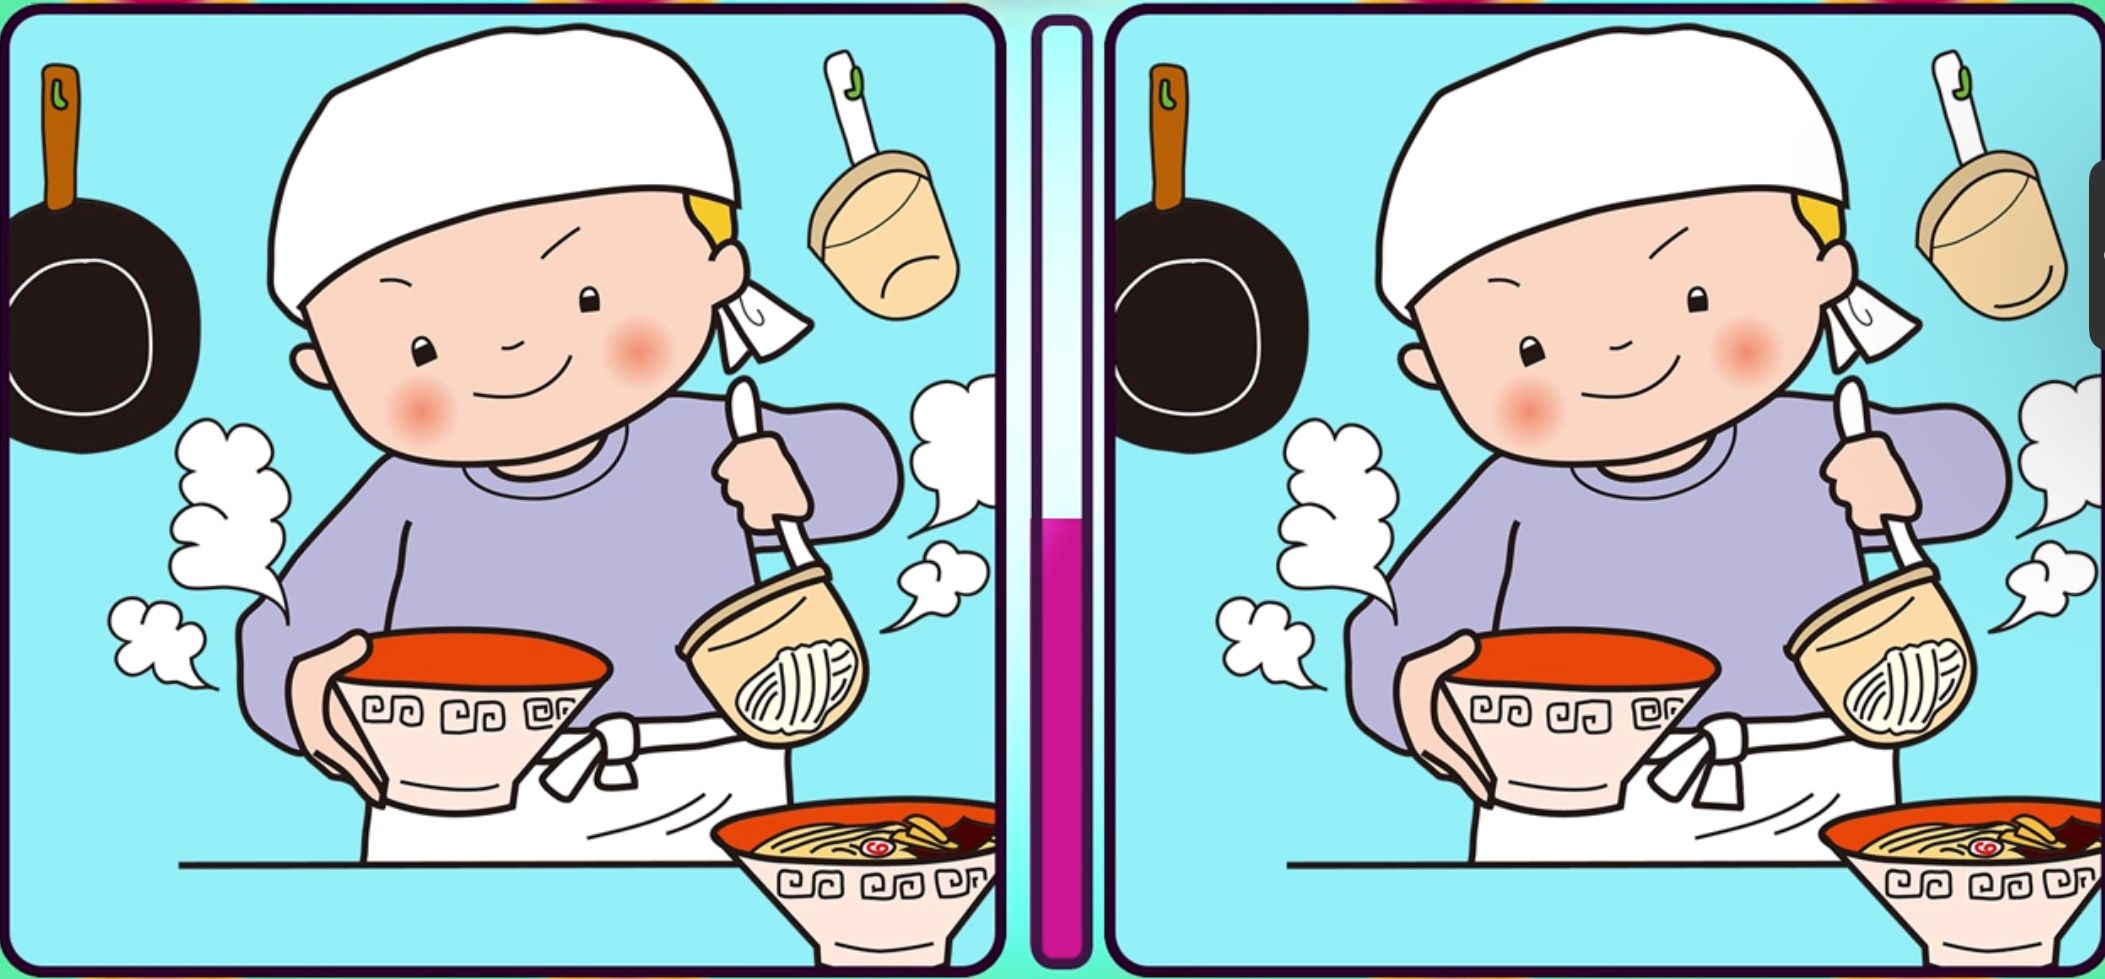 Jika koki handal dalam memasak, maka Kamu harus handal dalam menemukan perbedaan gambar koki ramen di tes IQ kali ini.